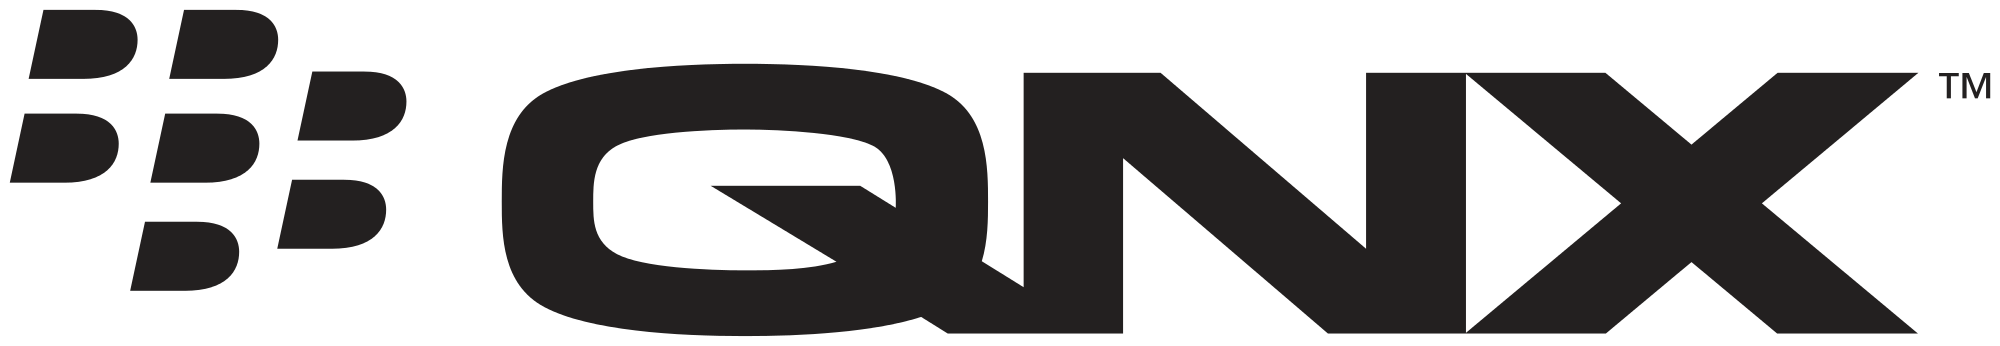 QNX Logo - File:QNX 201x logo.svg - Wikimedia Commons